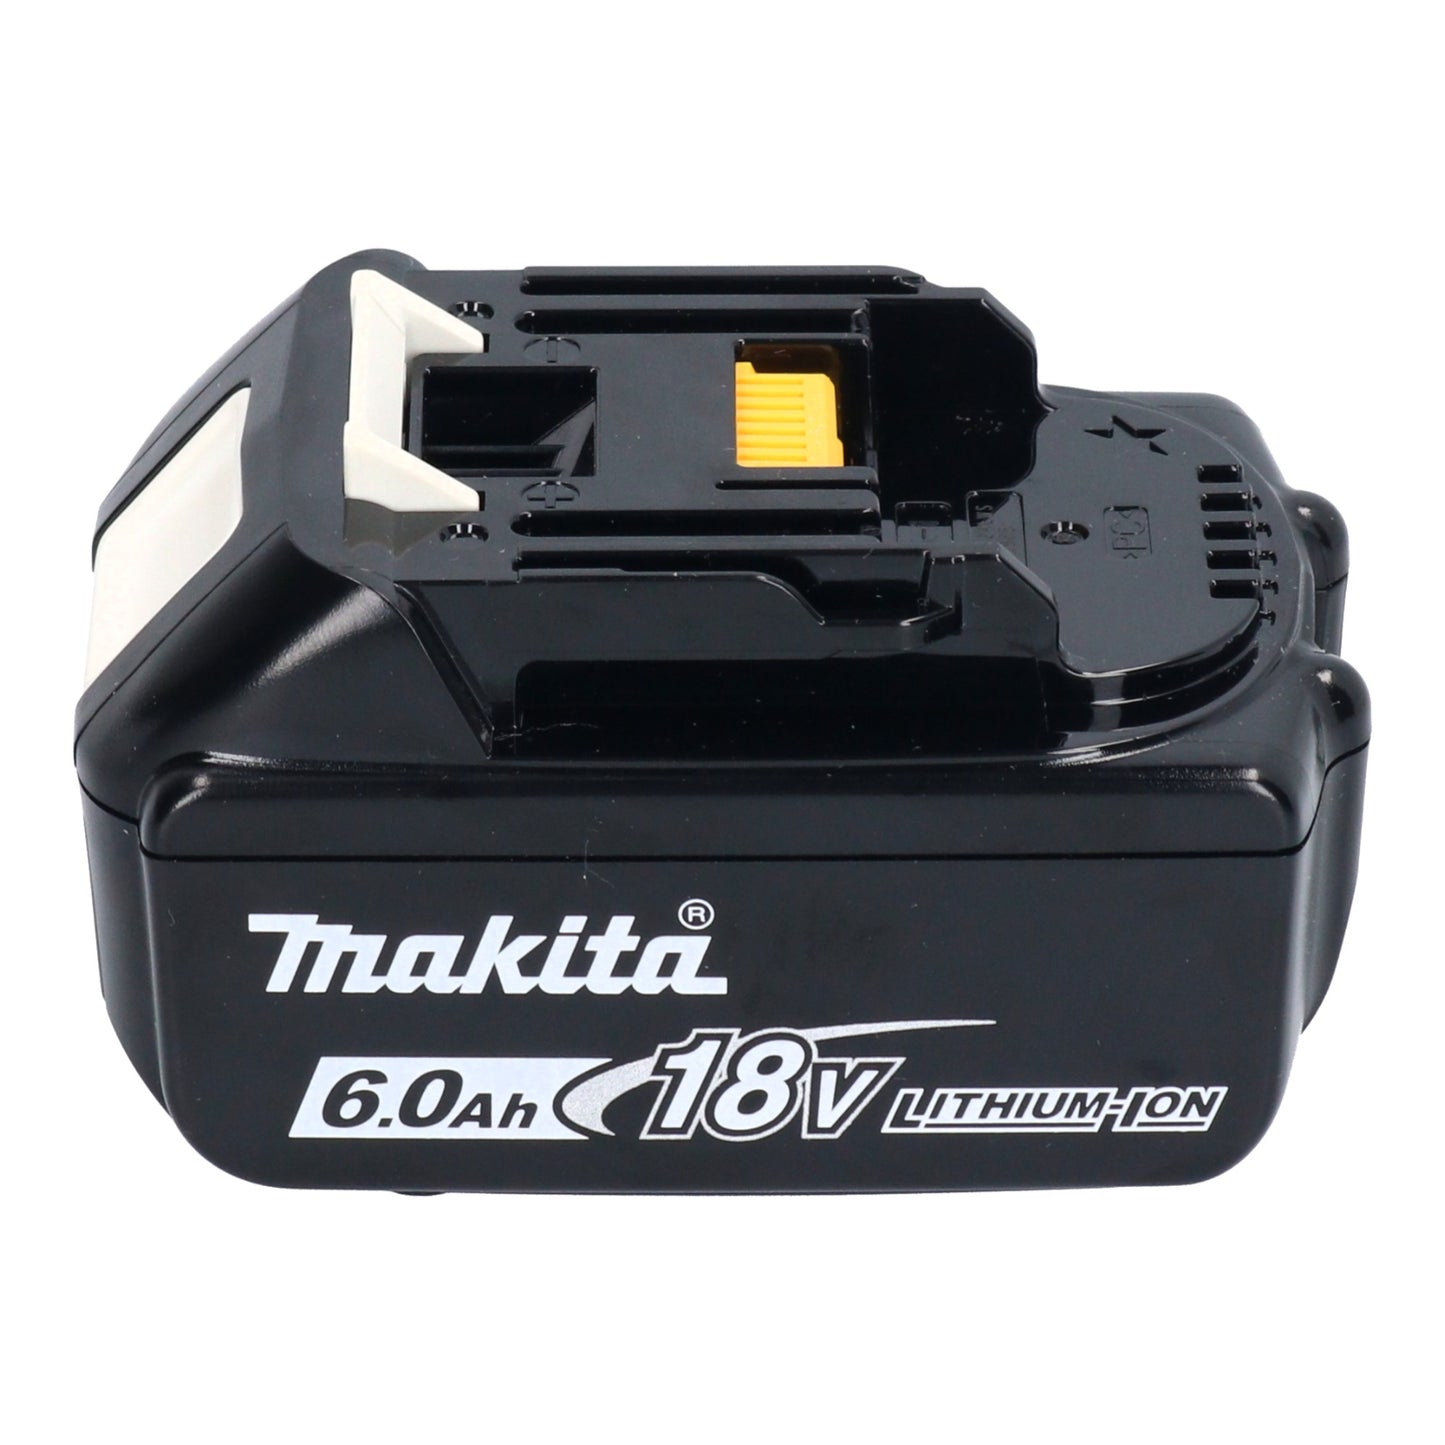 Makita DDF 083 G1J Akku Bohrschrauber 18 V 40 Nm 1/4'' Brushless + 1x Akku 6,0 Ah + Makpac - ohne Ladegerät